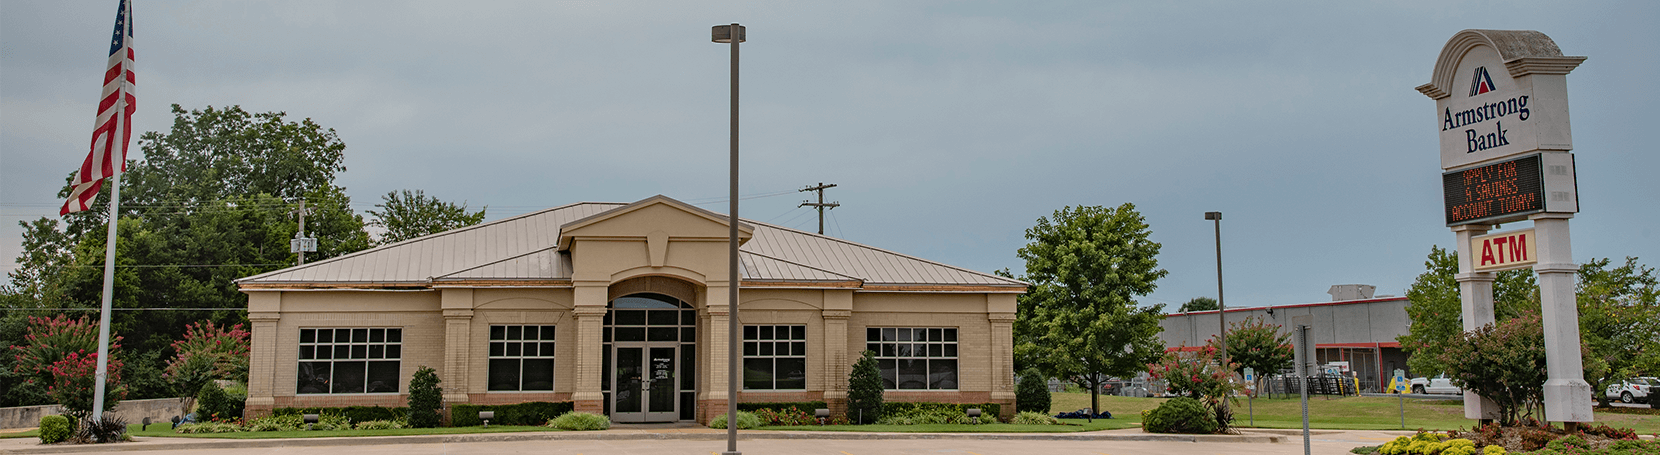 Armstrong Bank building in Checotah, Oklahoma